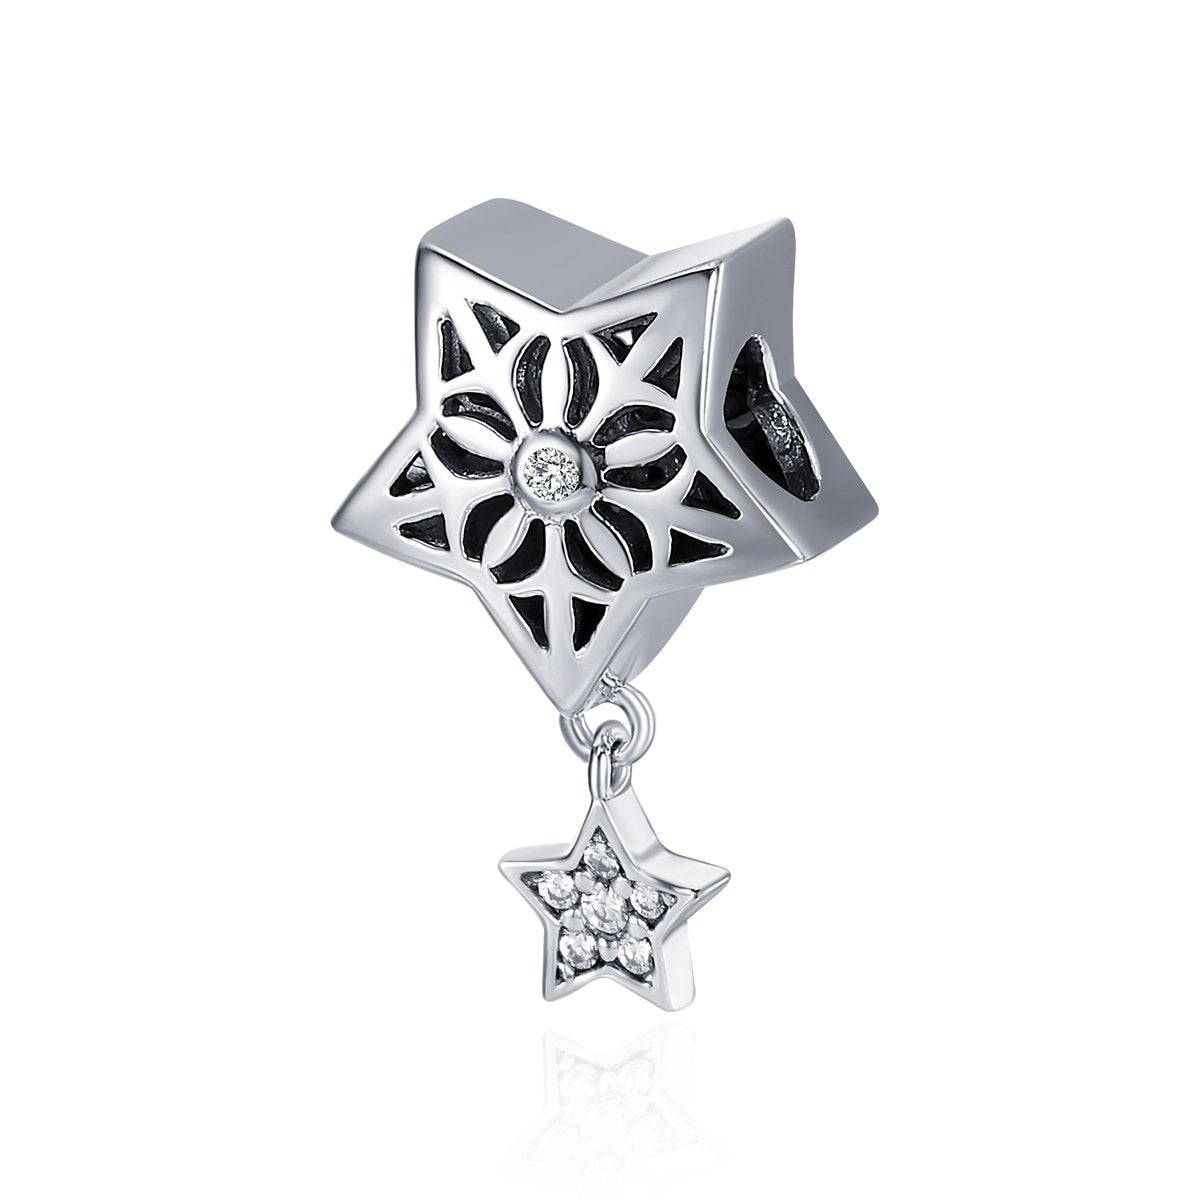 Sterling 925 silver charm the double stars bead pendant fits Pandora charm and European charm bracelet Xaxe.com